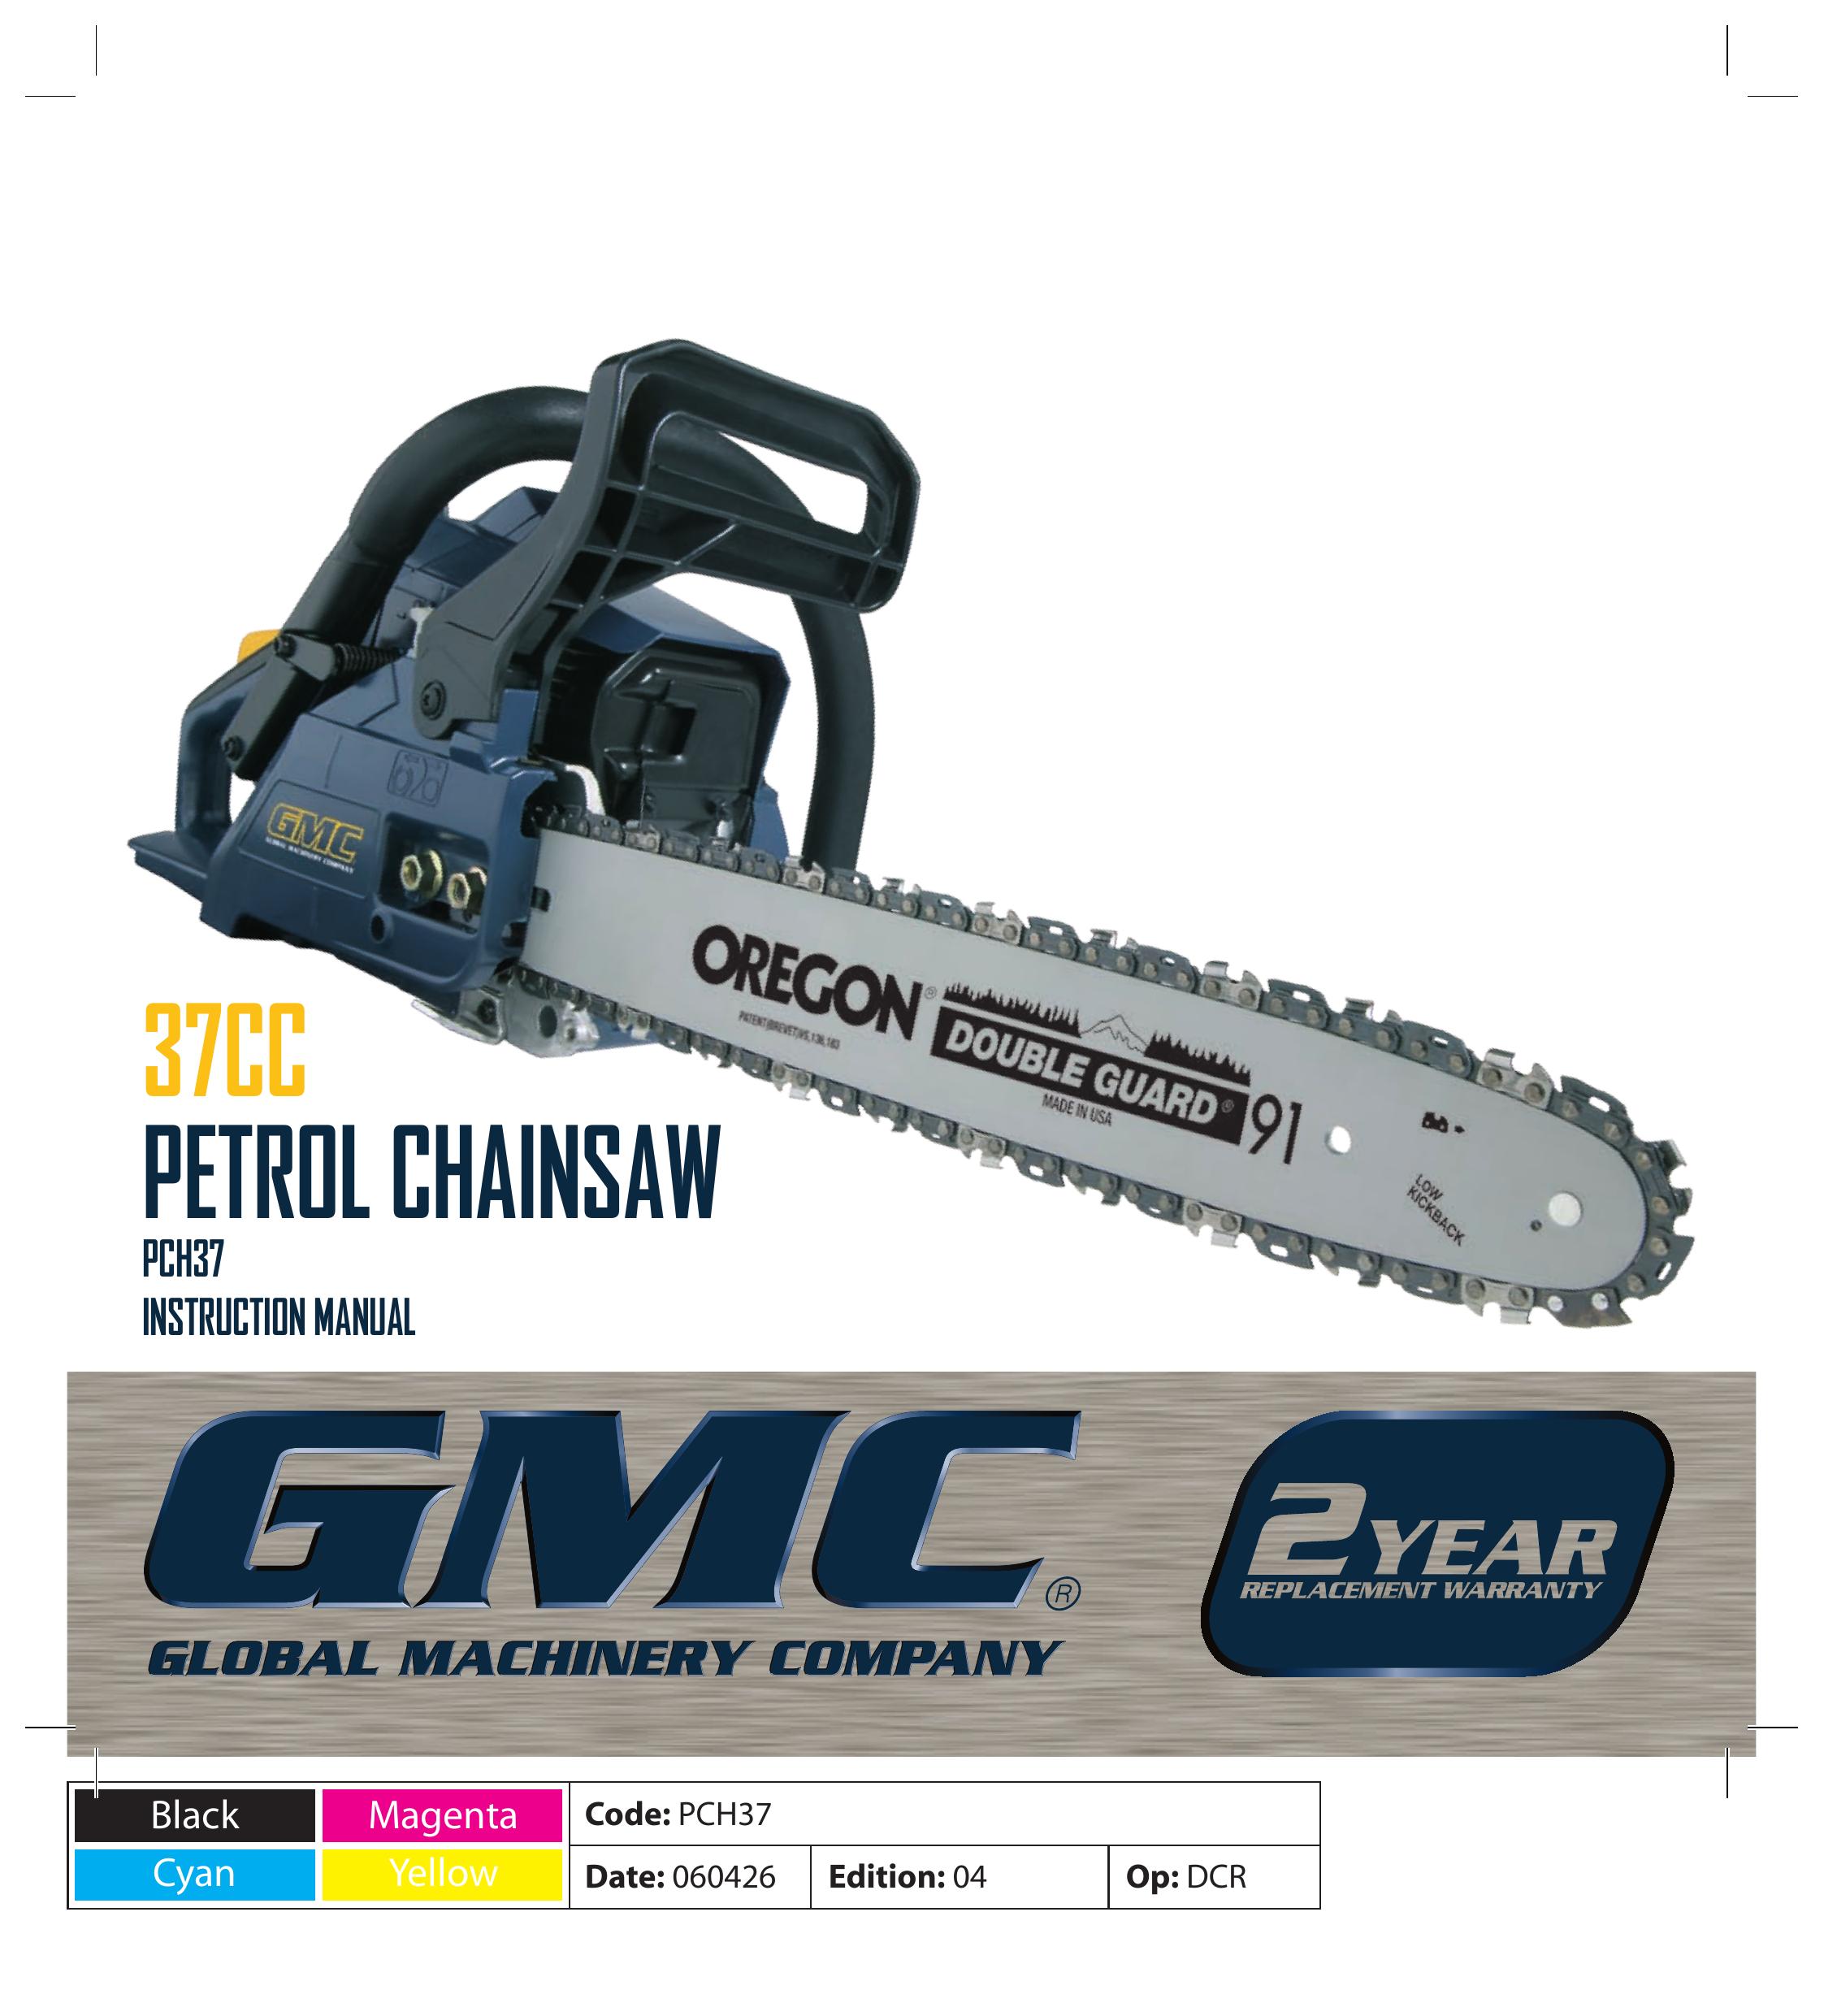 Global Machinery Company PCH37 Chainsaw User Manual